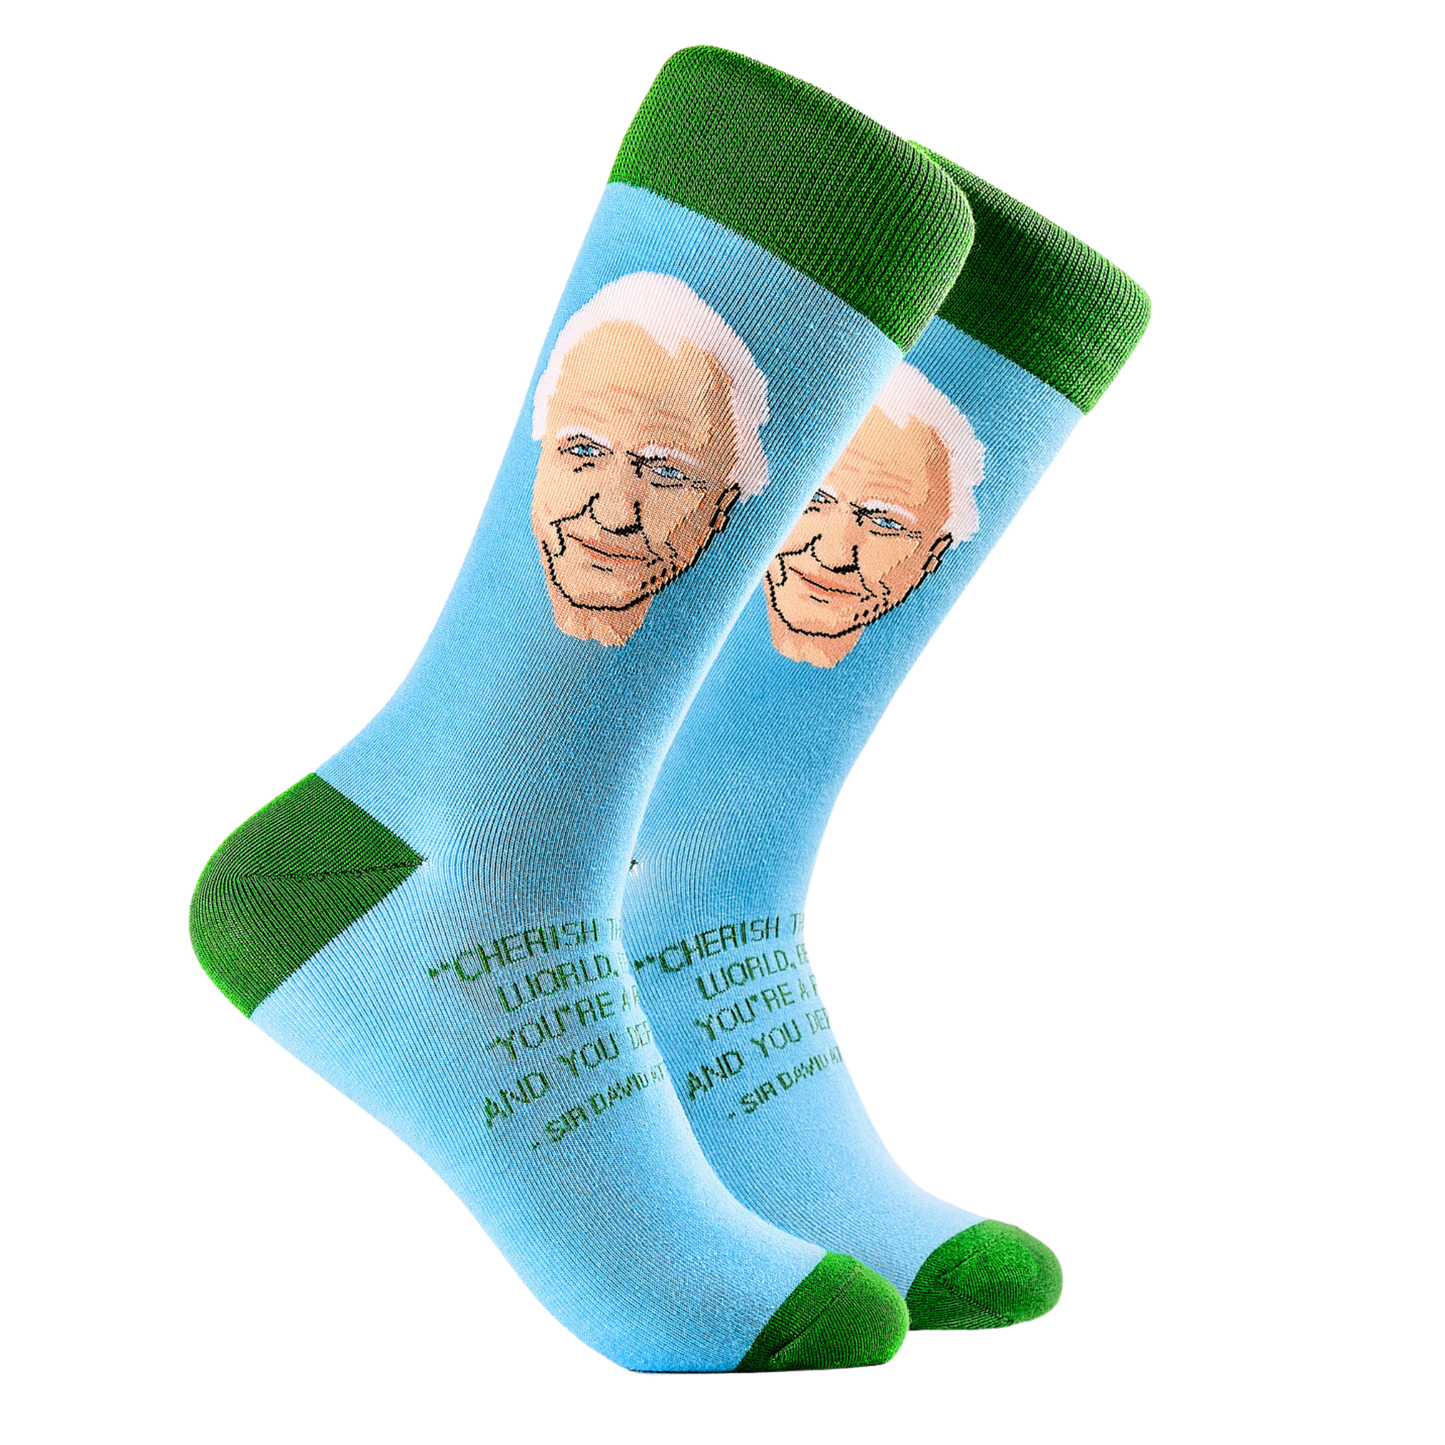 Sir David Attenborough Socks